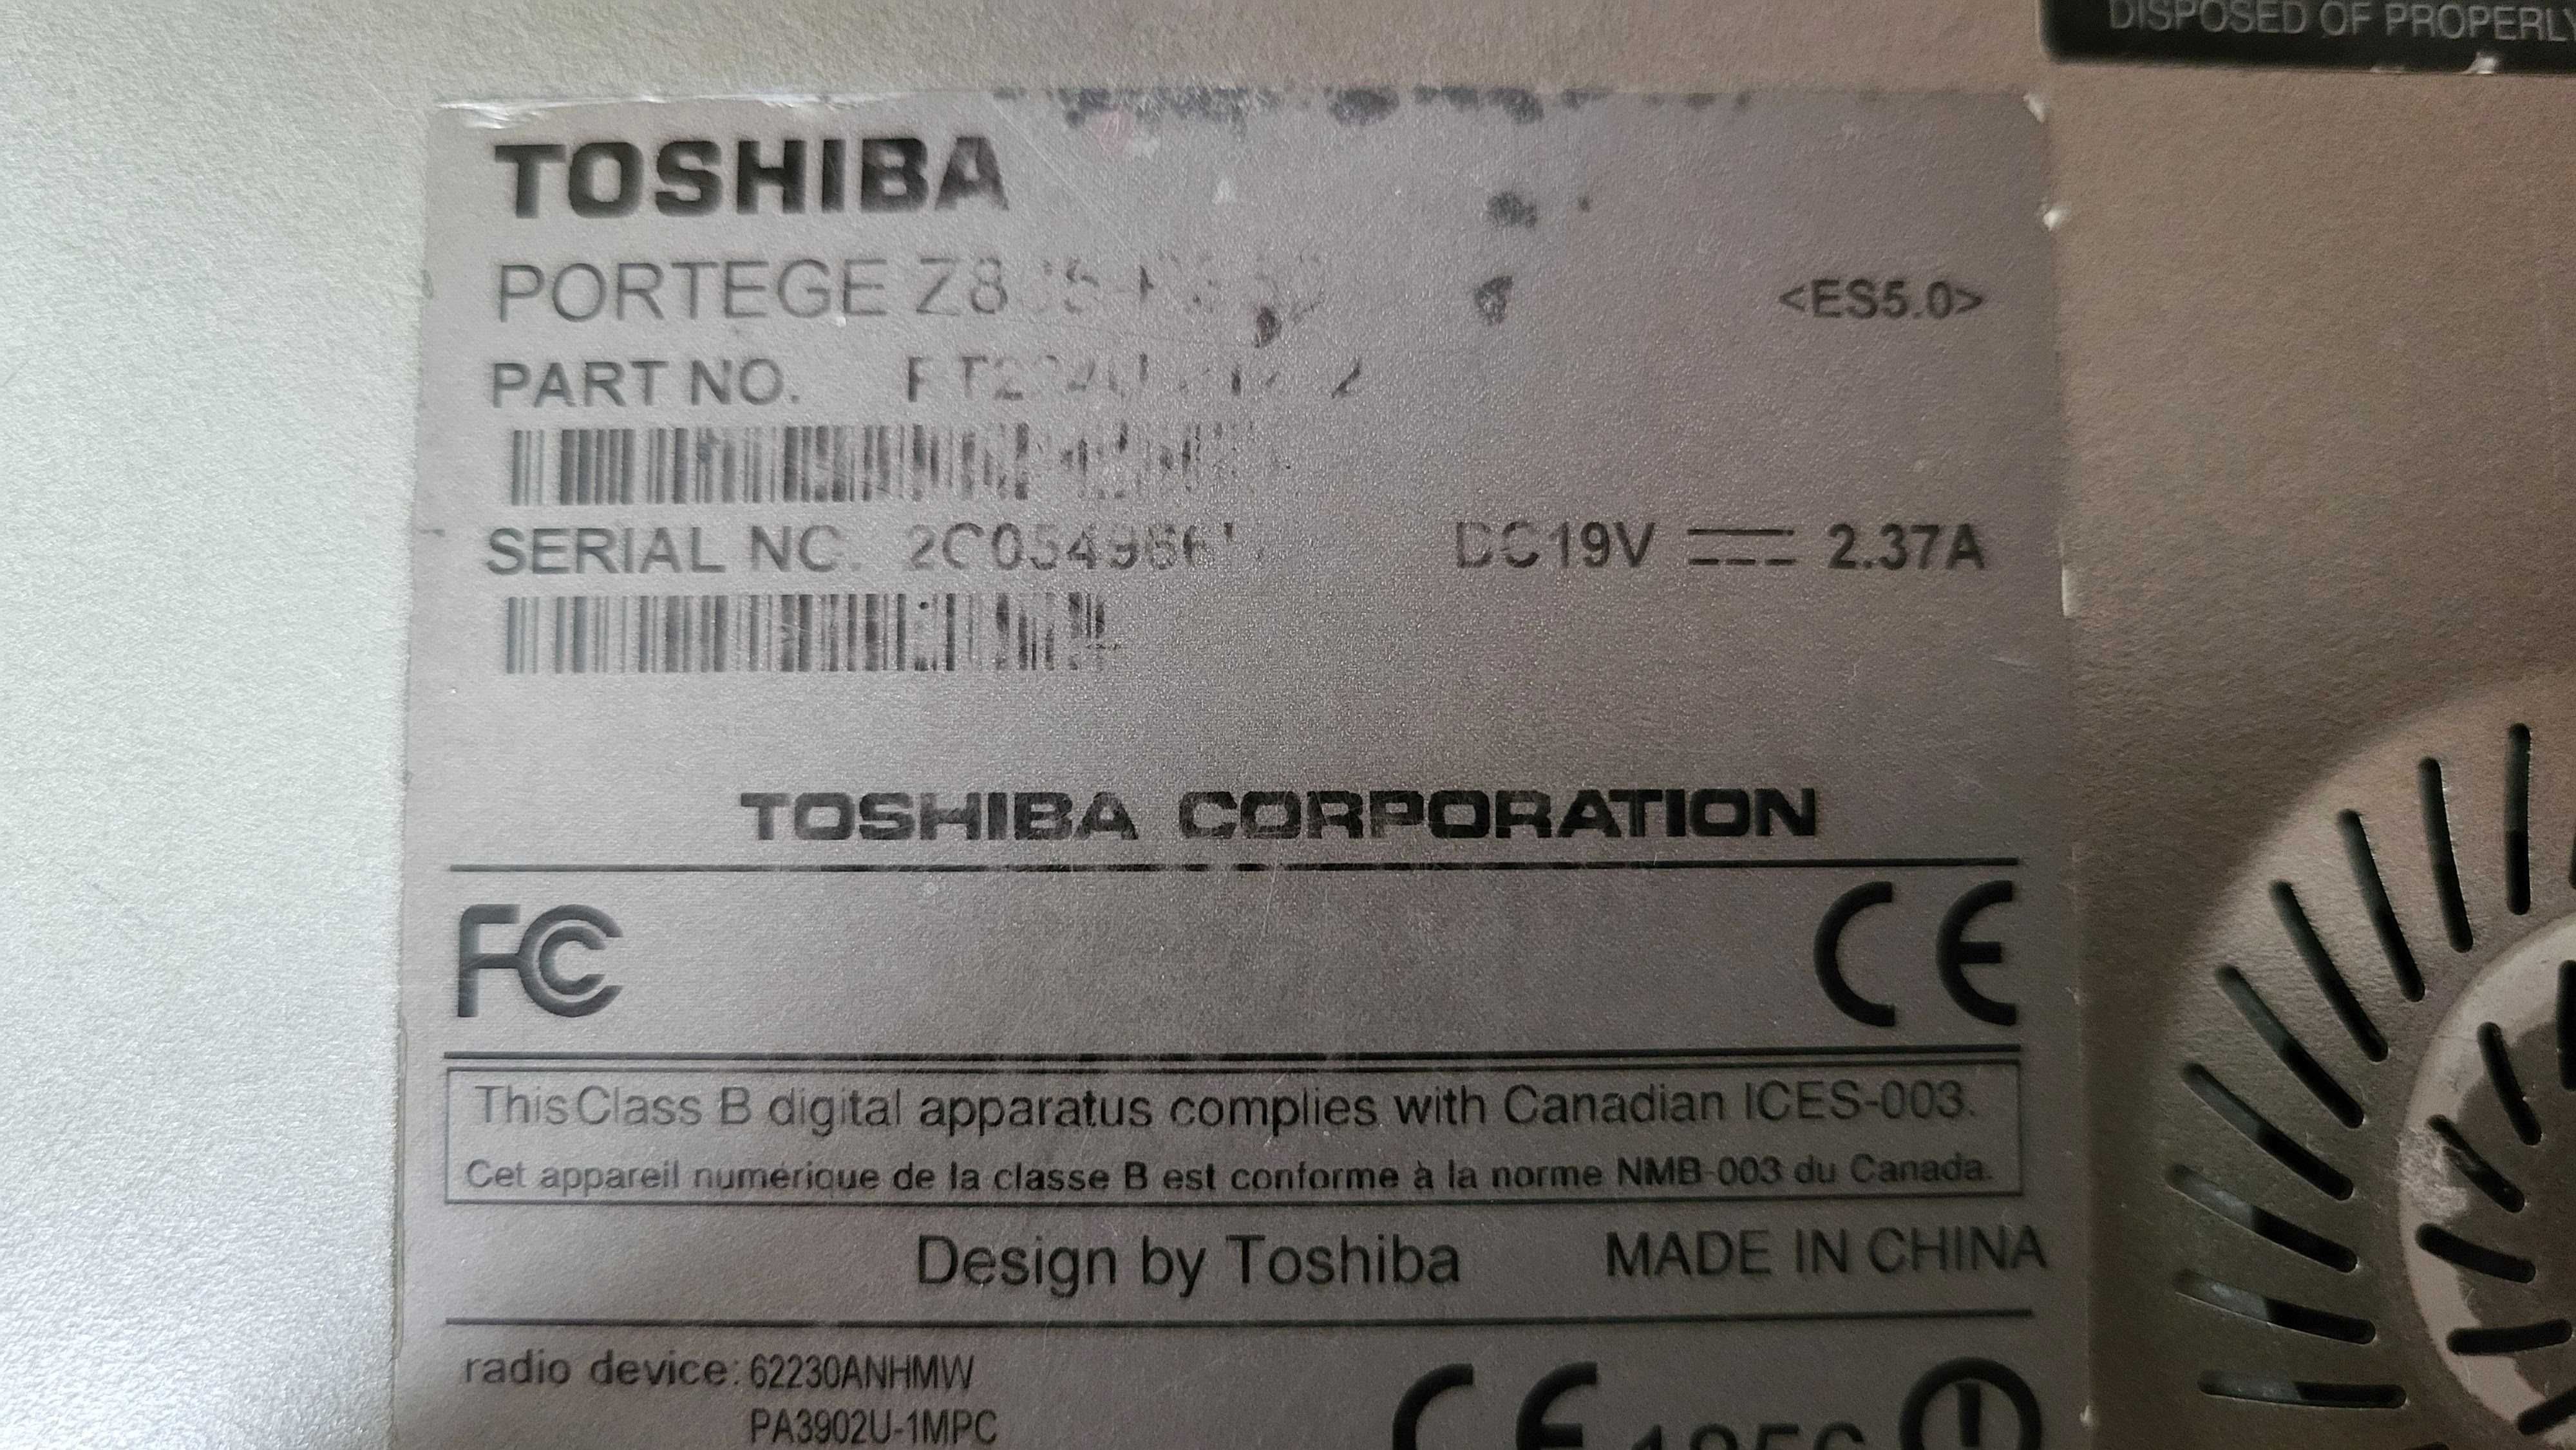 Laptop Toshiba Portege Z835 - Ultrabook (1kg)